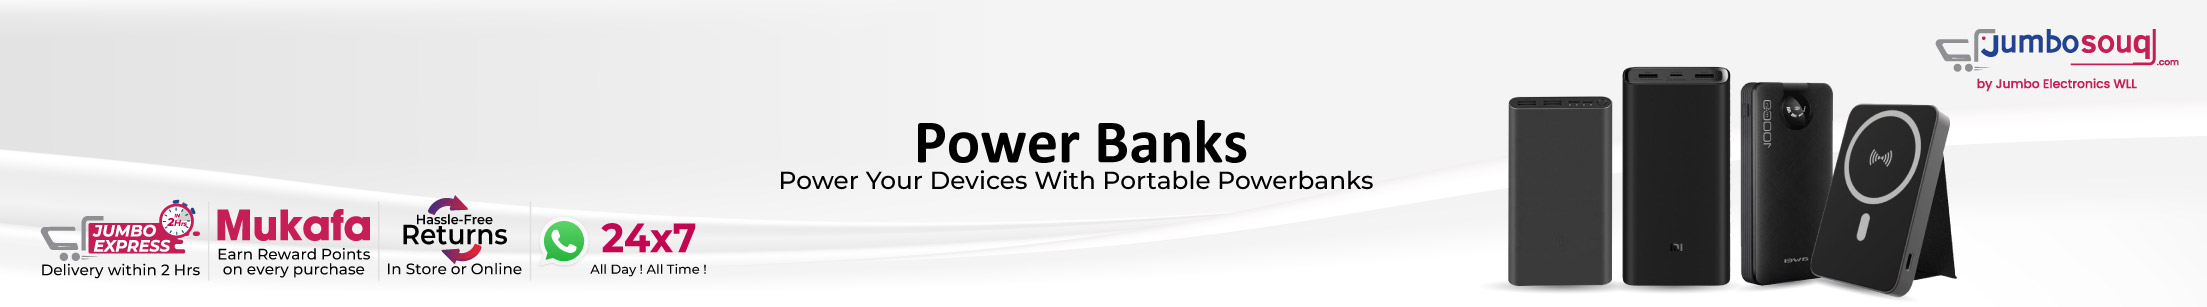 Powerbanks